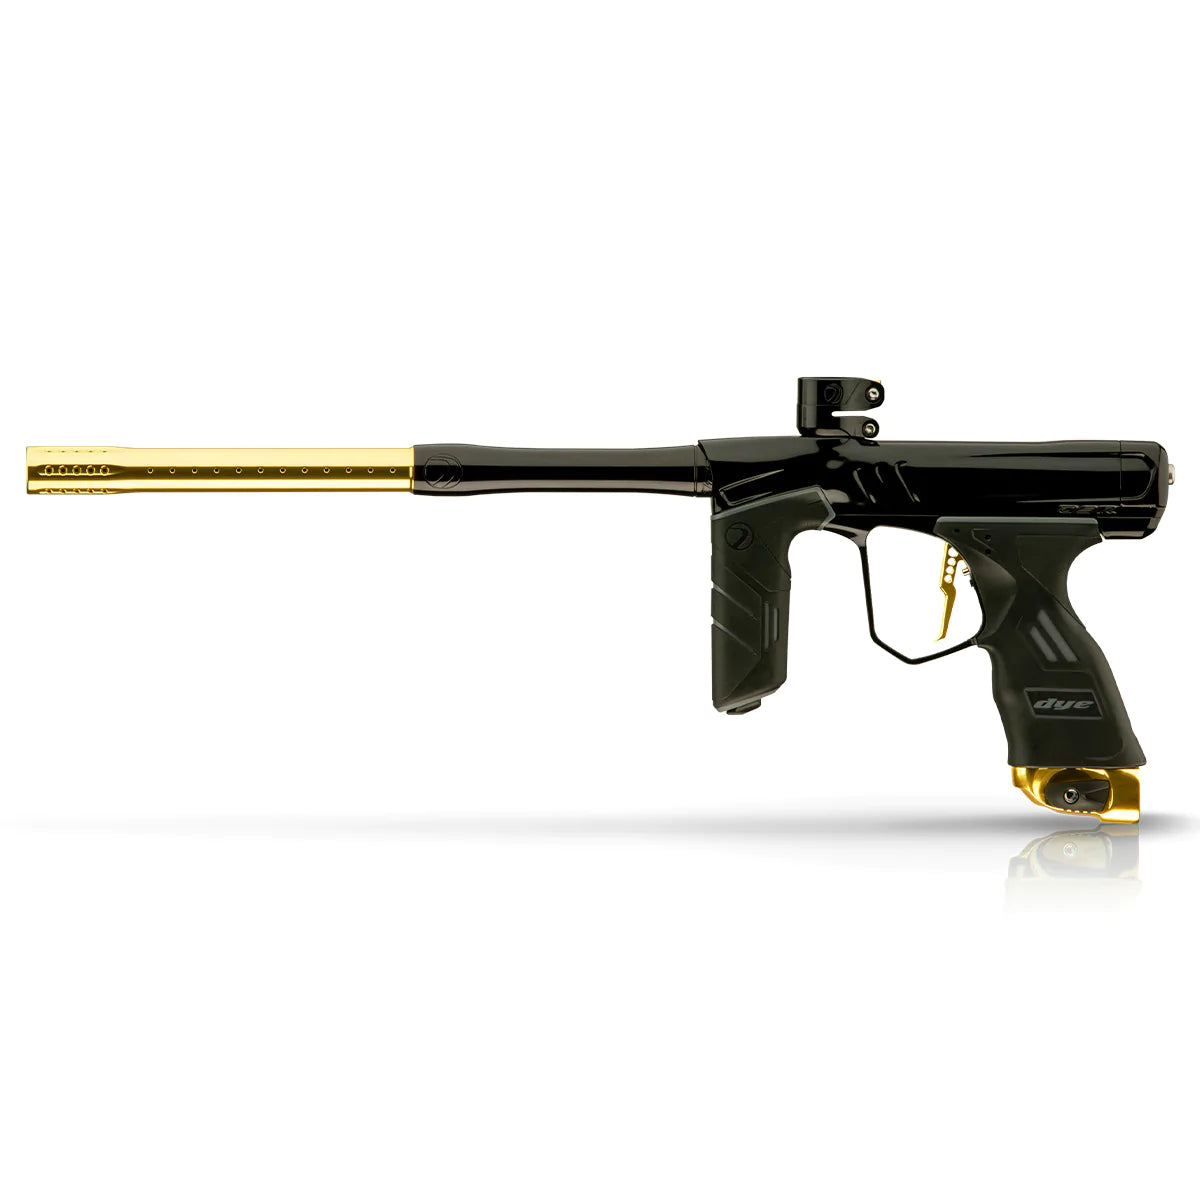 Paintball Gun - dye